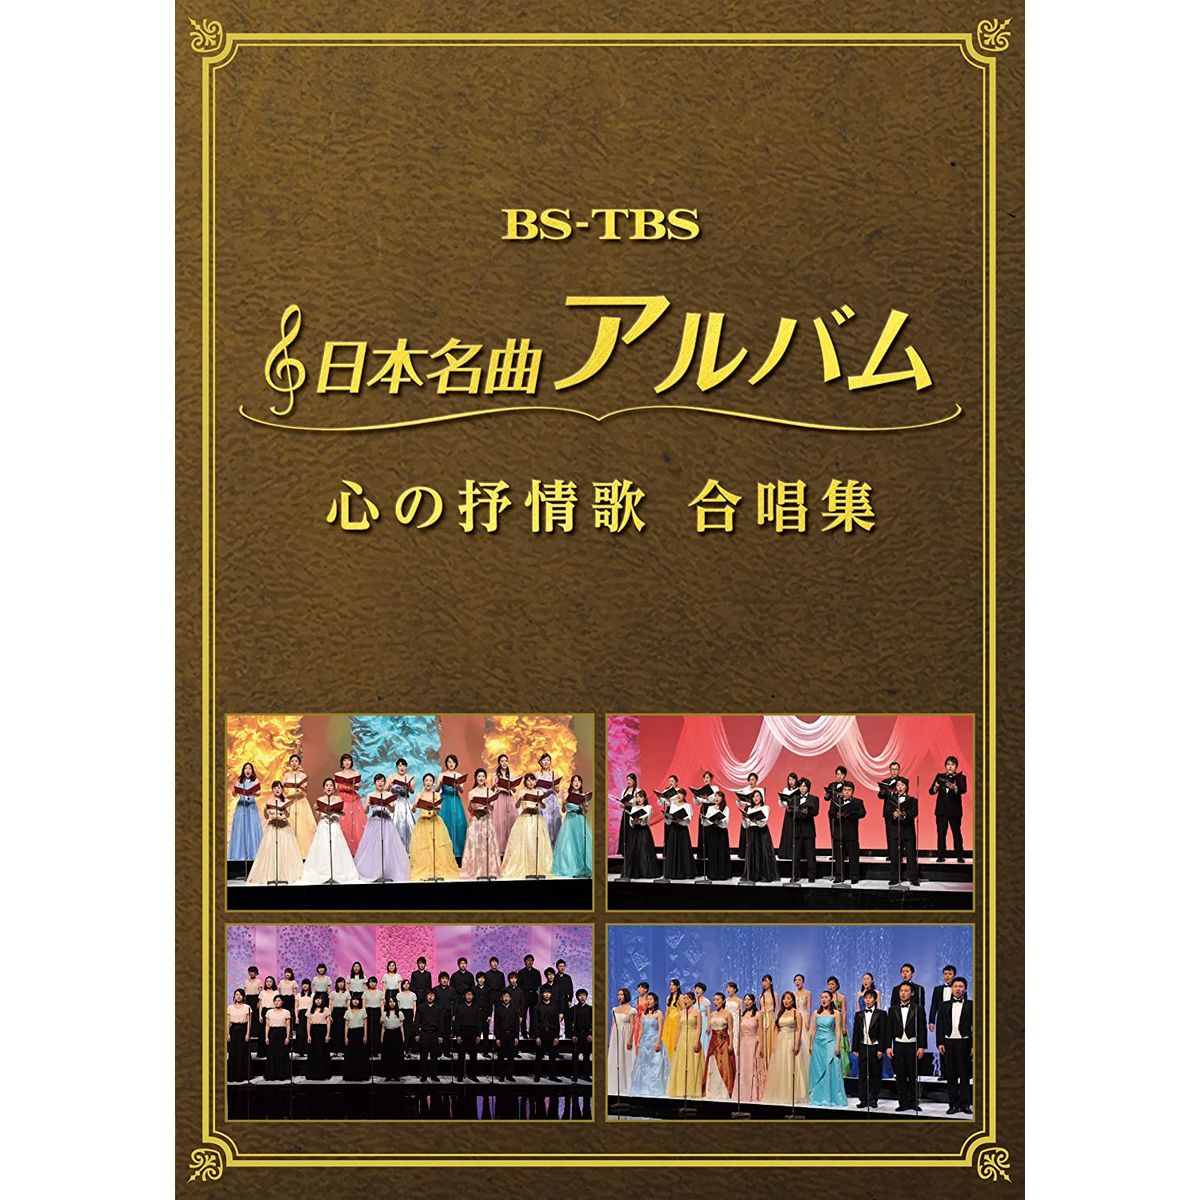 ■【DVD】日本名曲アルバム 心の抒情歌 合唱集 2枚組